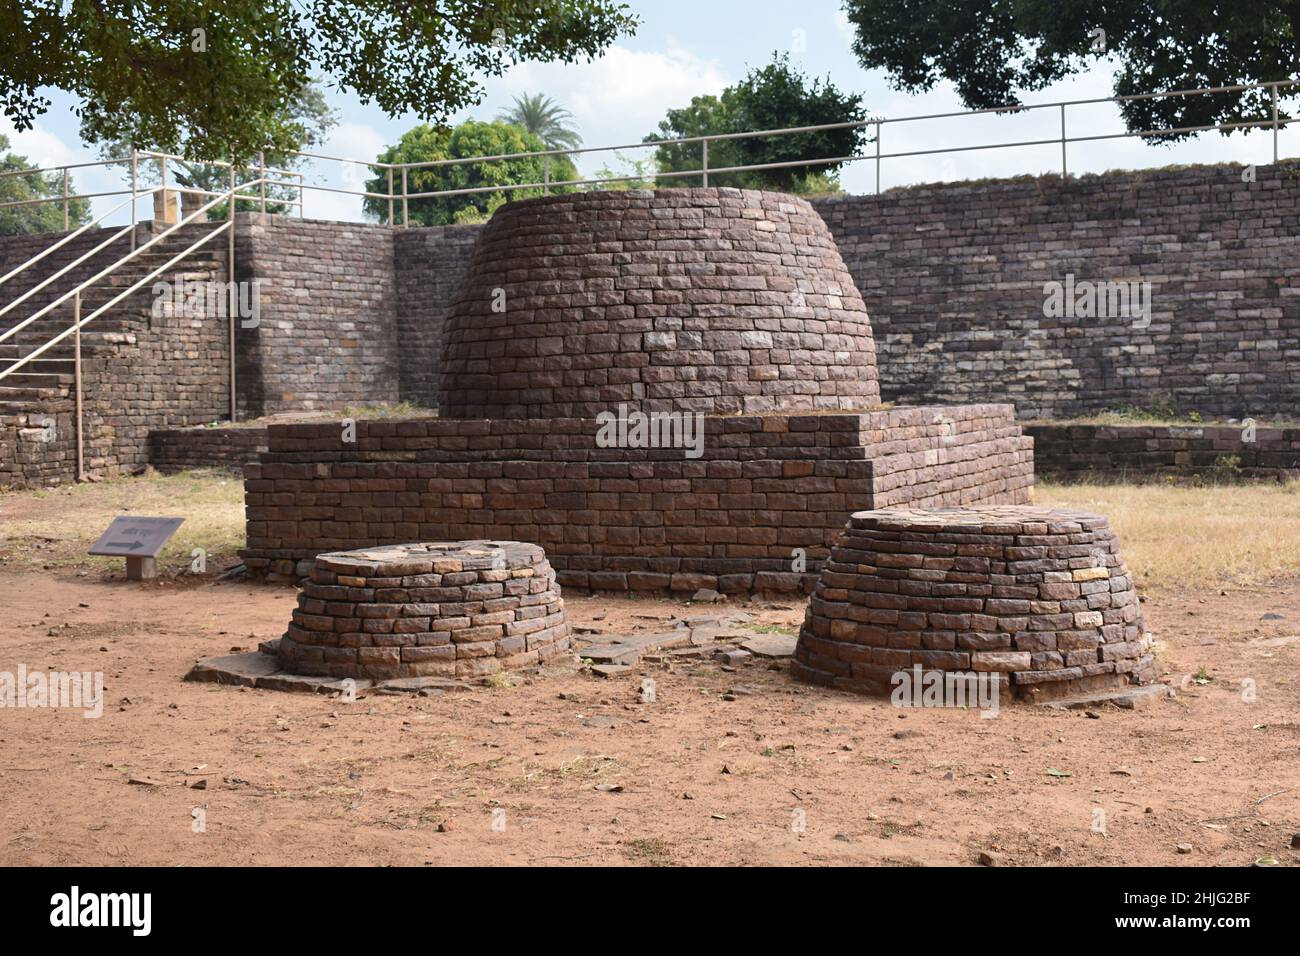 Remants of Votive stupas nearby. Sanchi monuments, World Heritage Site, Madhya Pradesh, India. Stock Photo